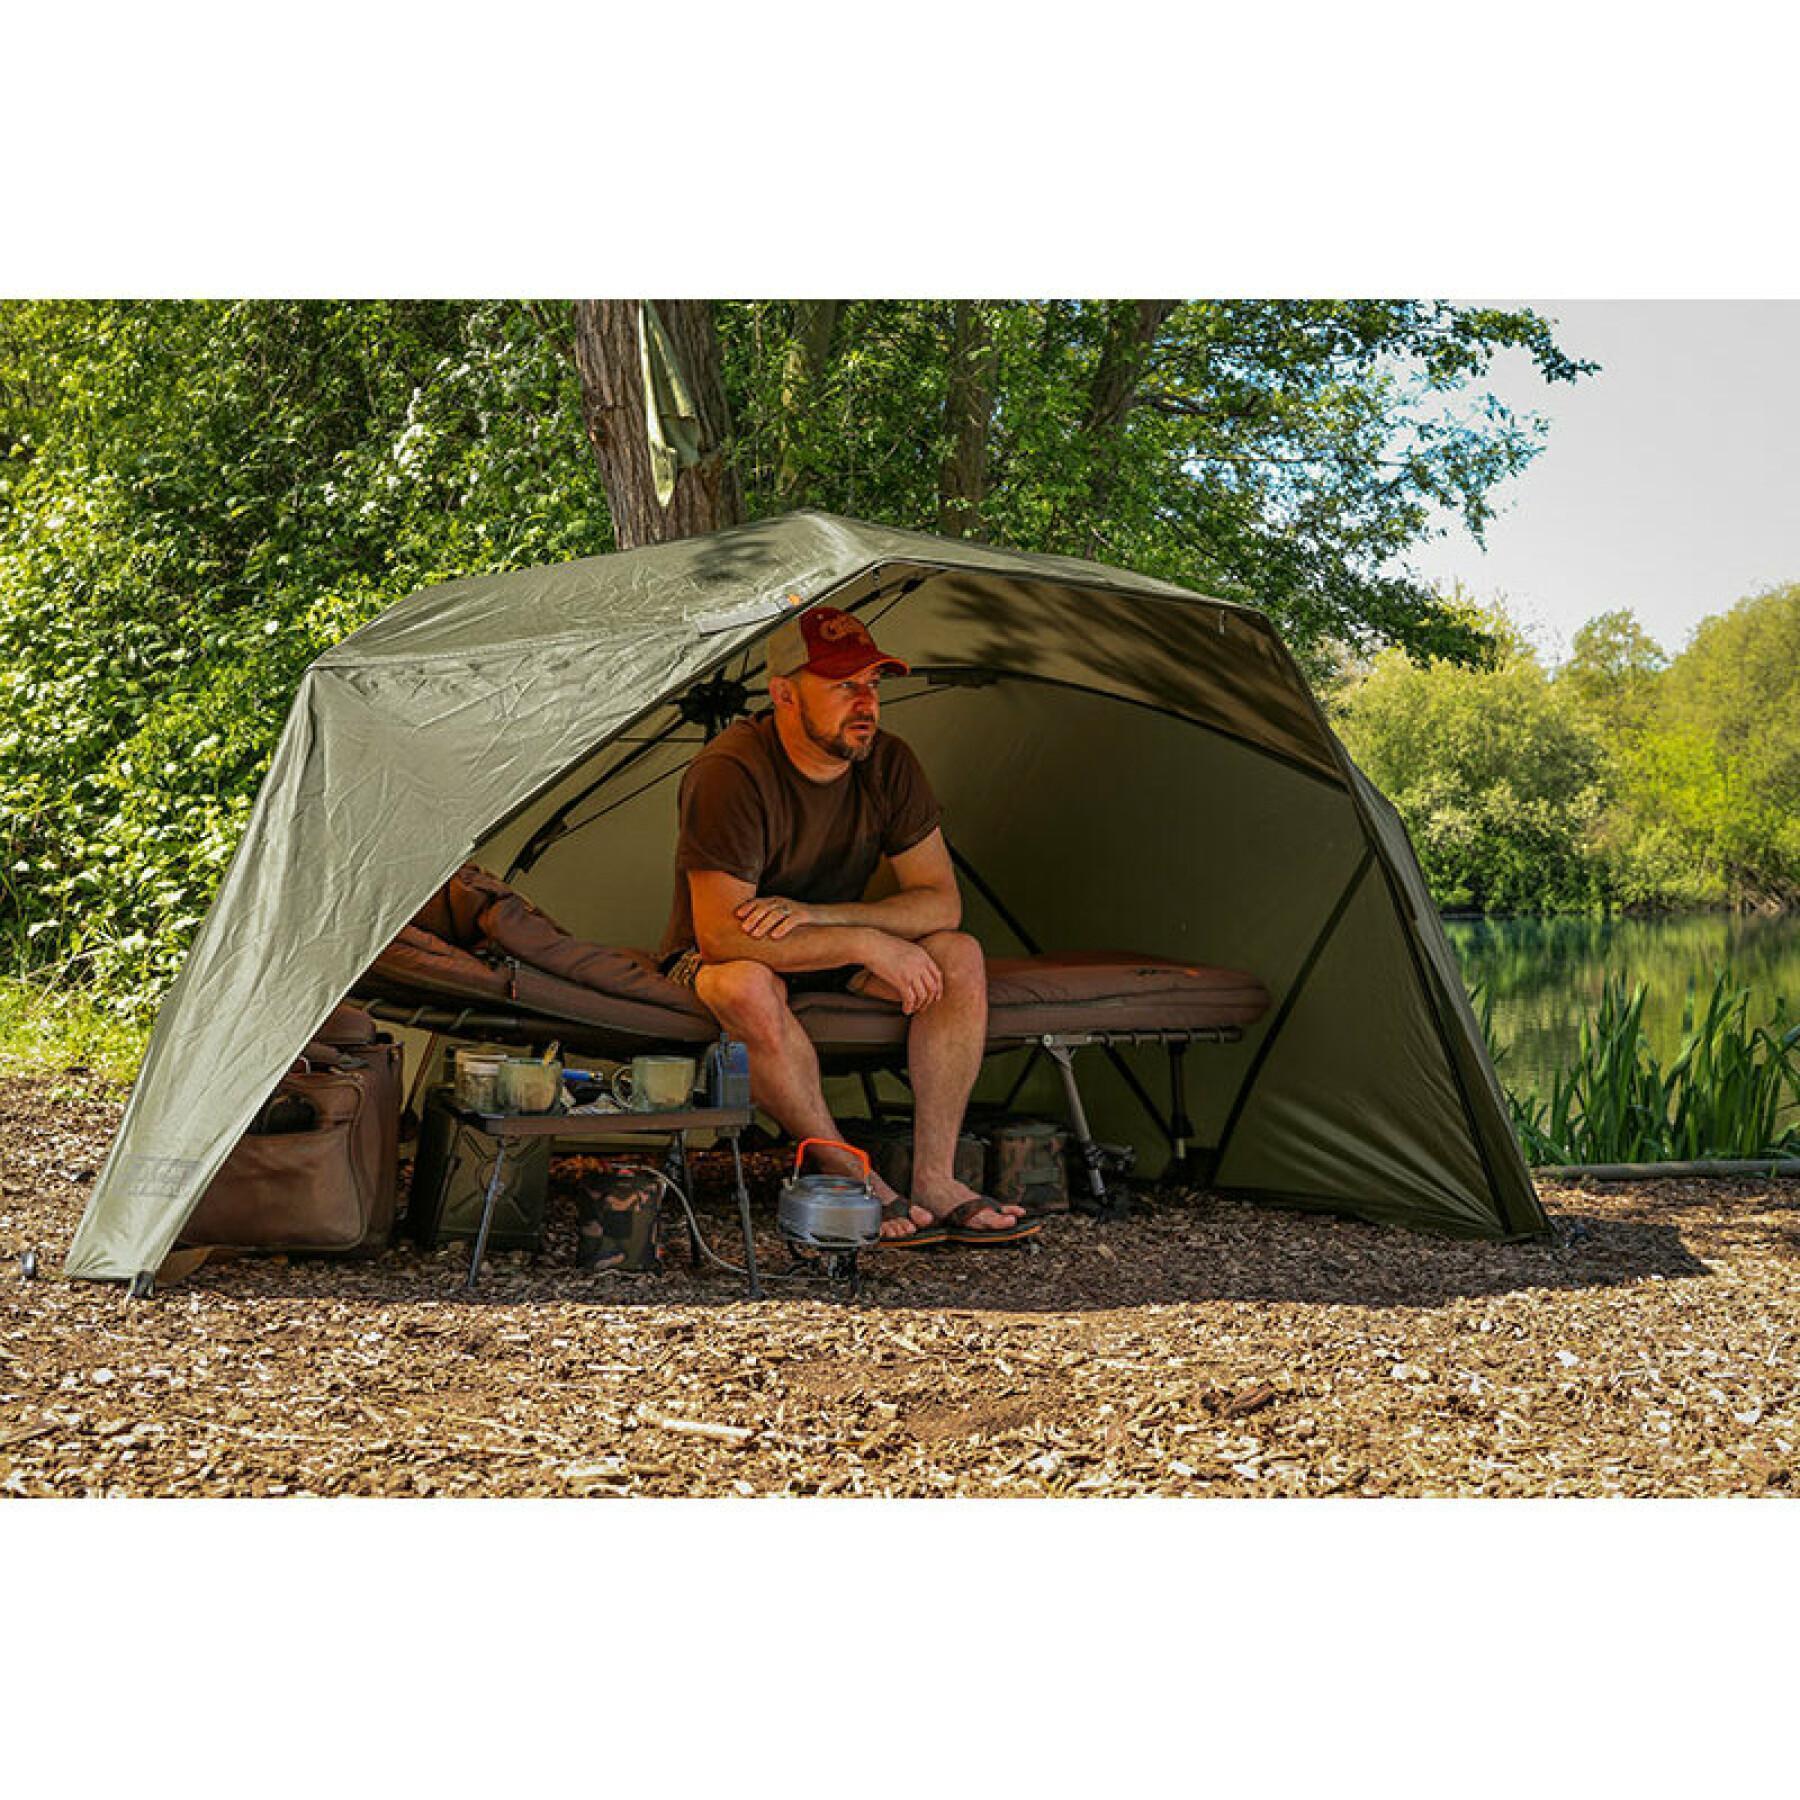 Łatwy namiot Fox brolly